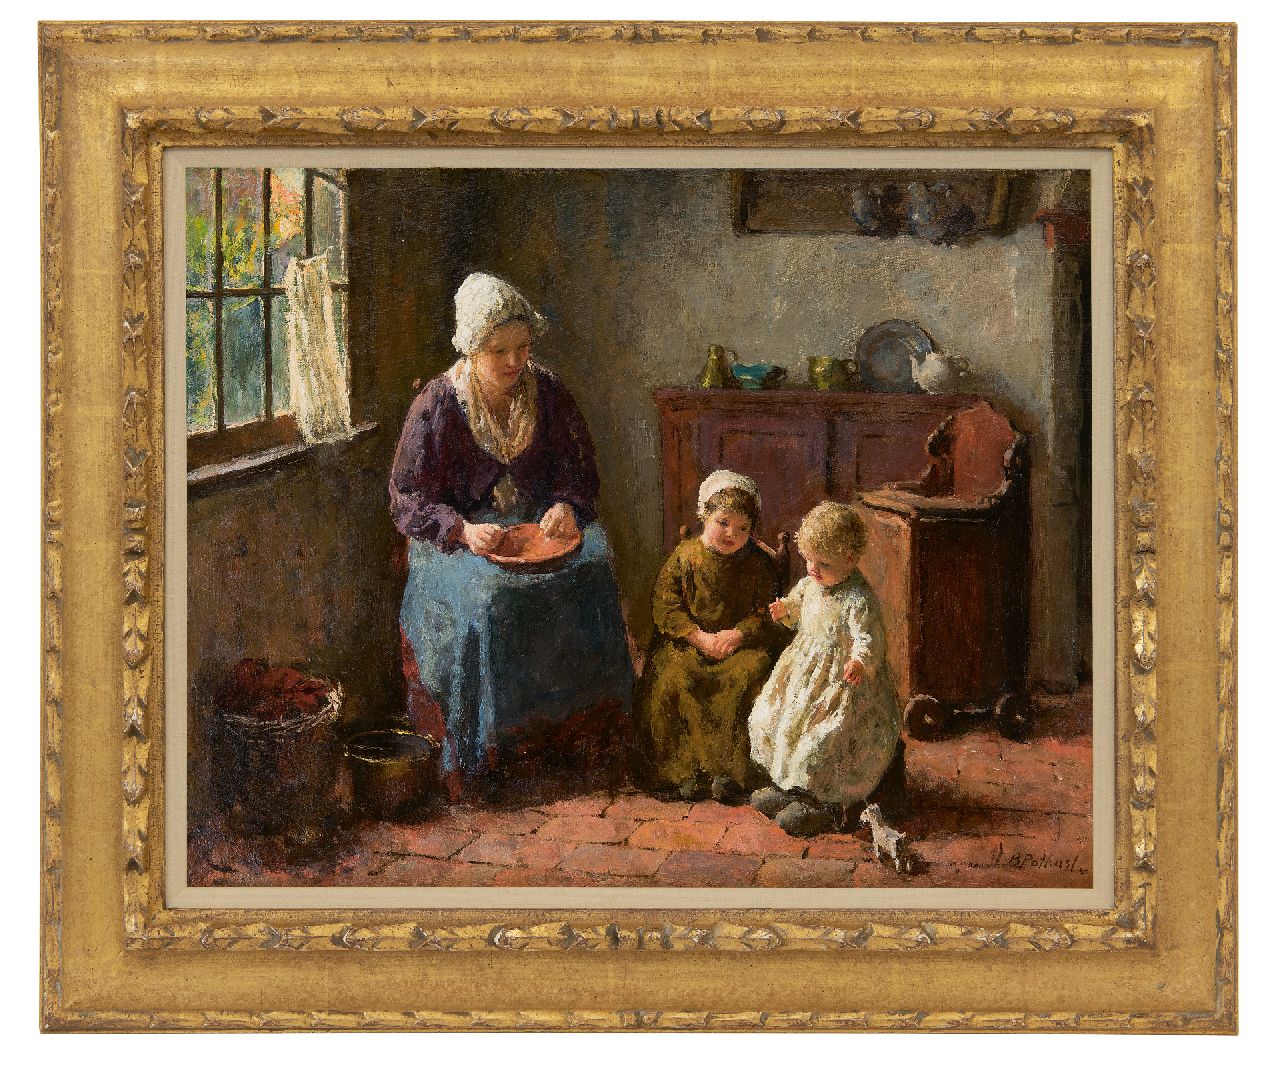 Pothast B.J.C.  | 'Bernard' Jean Corneille Pothast | Paintings offered for sale | Motherly love, oil on canvas 40.0 x 50.0 cm, signed l.r.